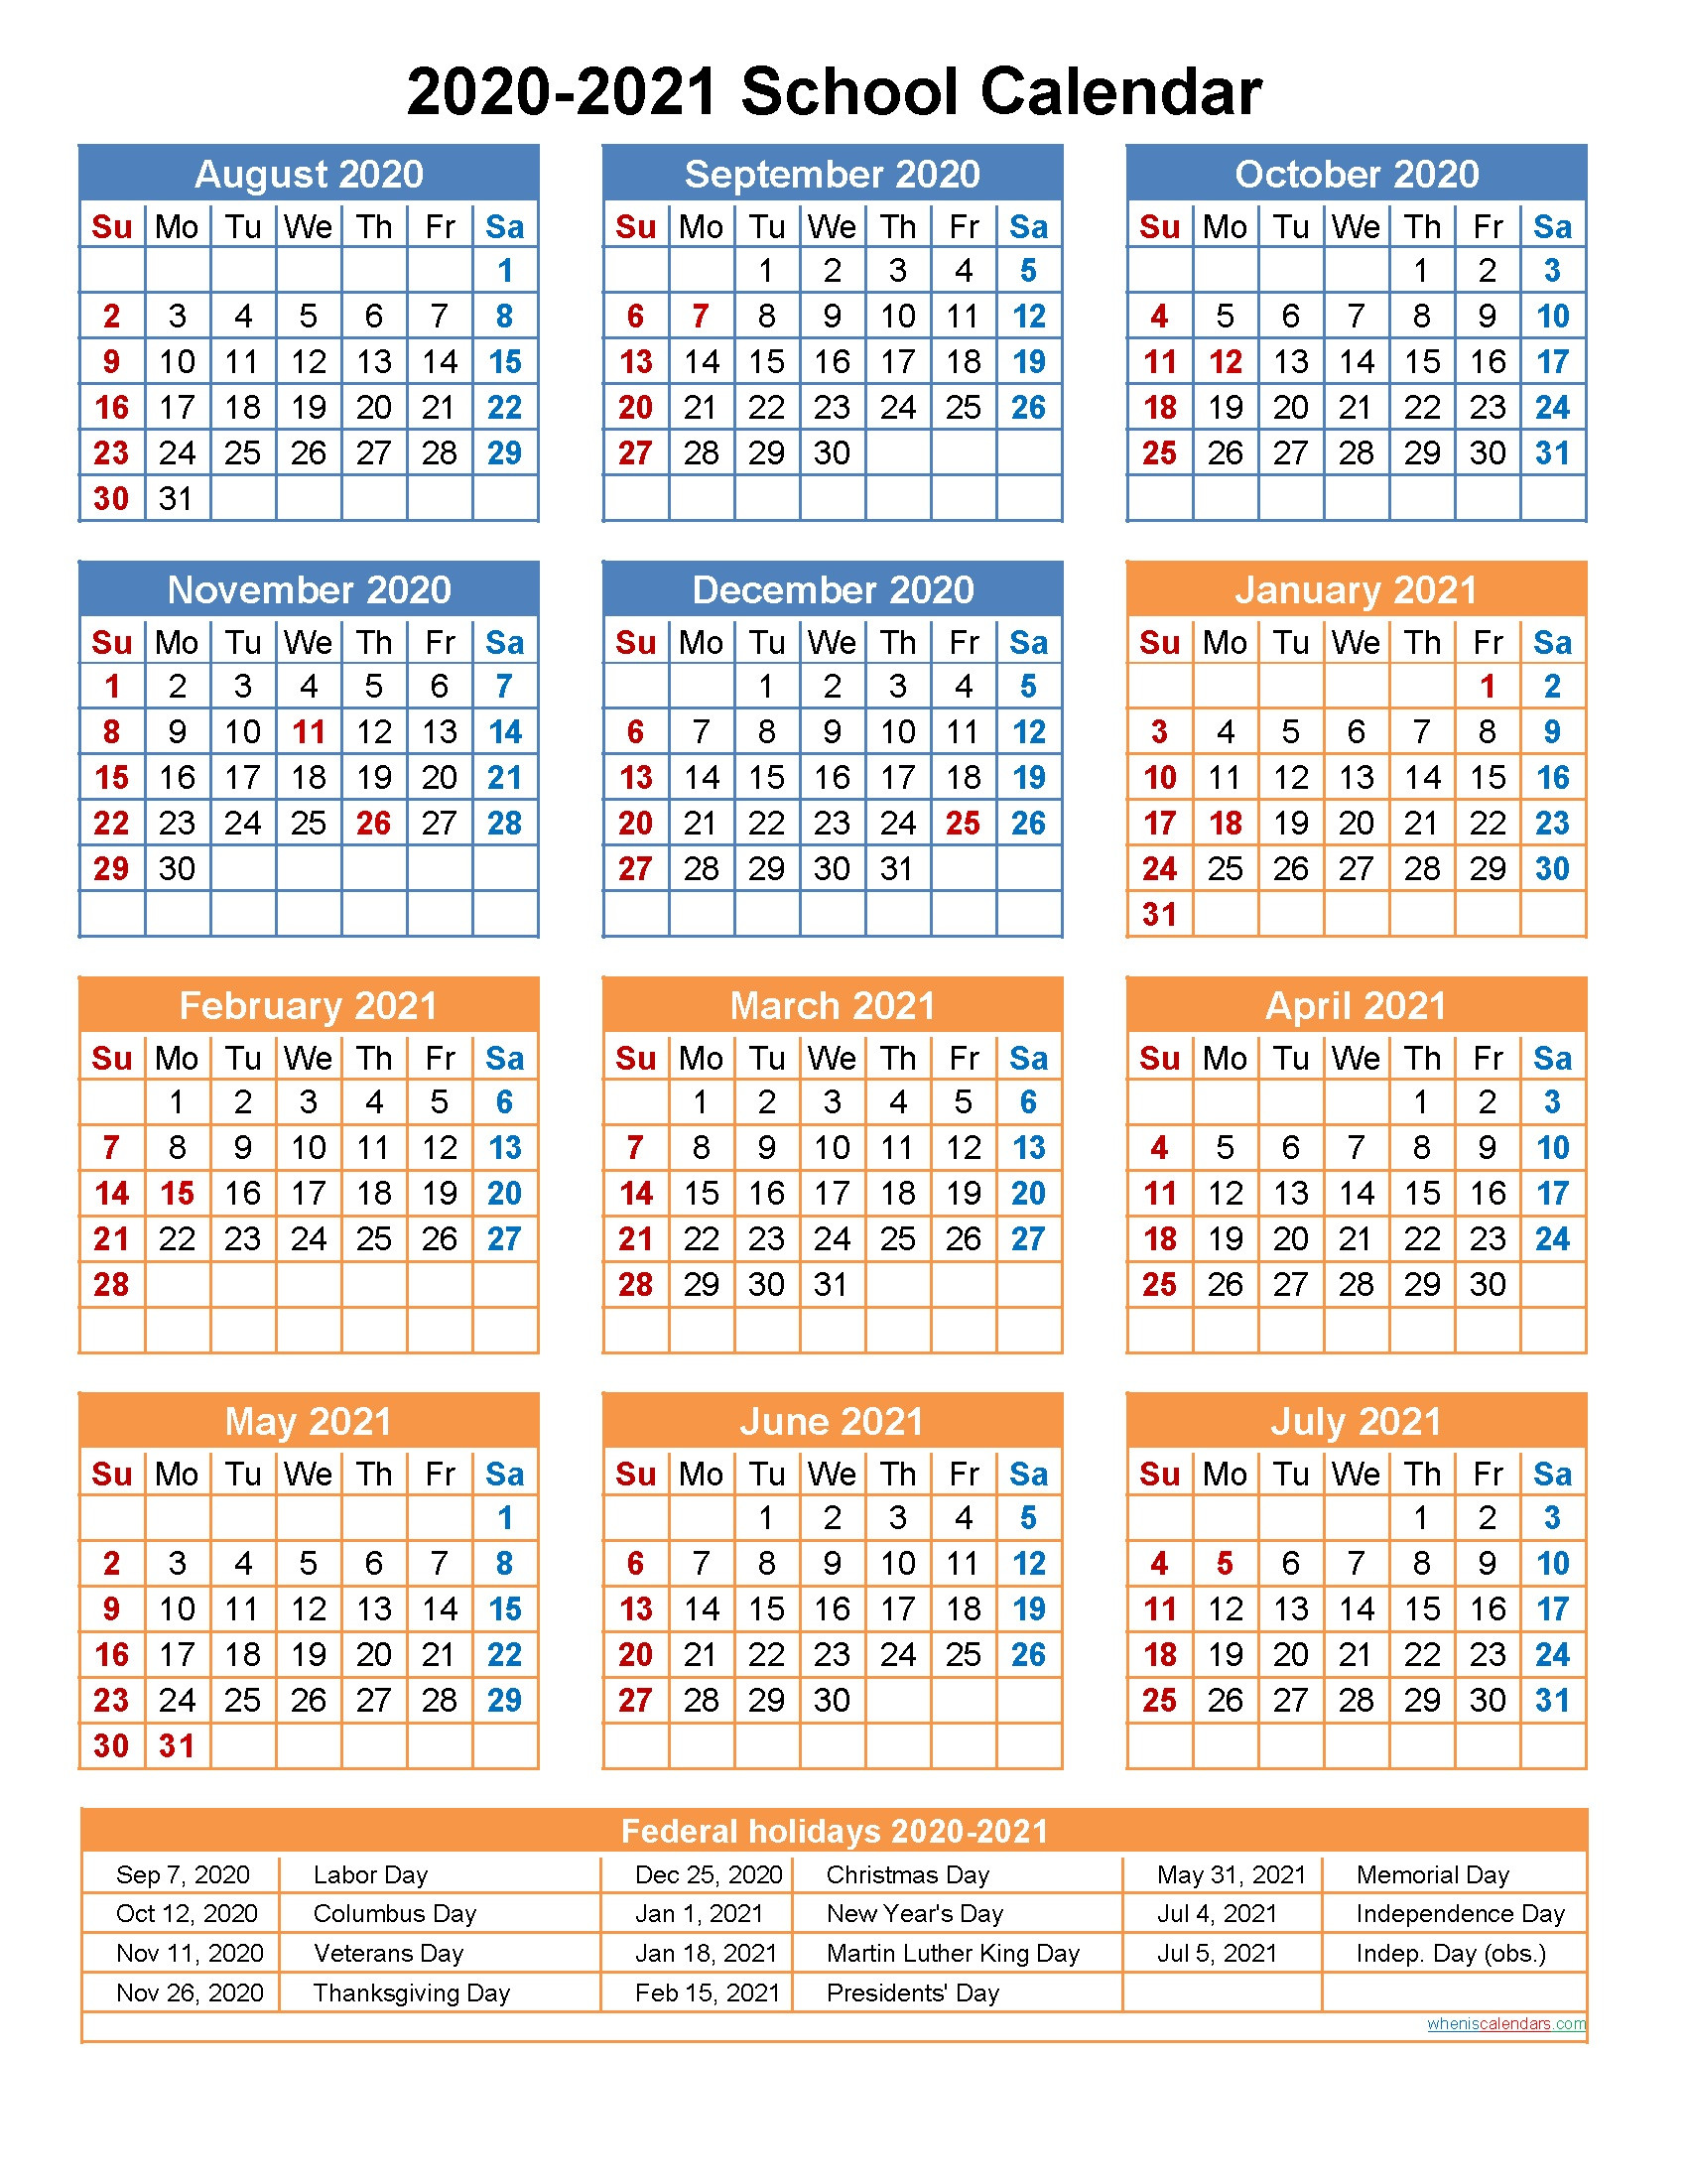 School Year Calendar Template School Year Calendar Template Addictionary